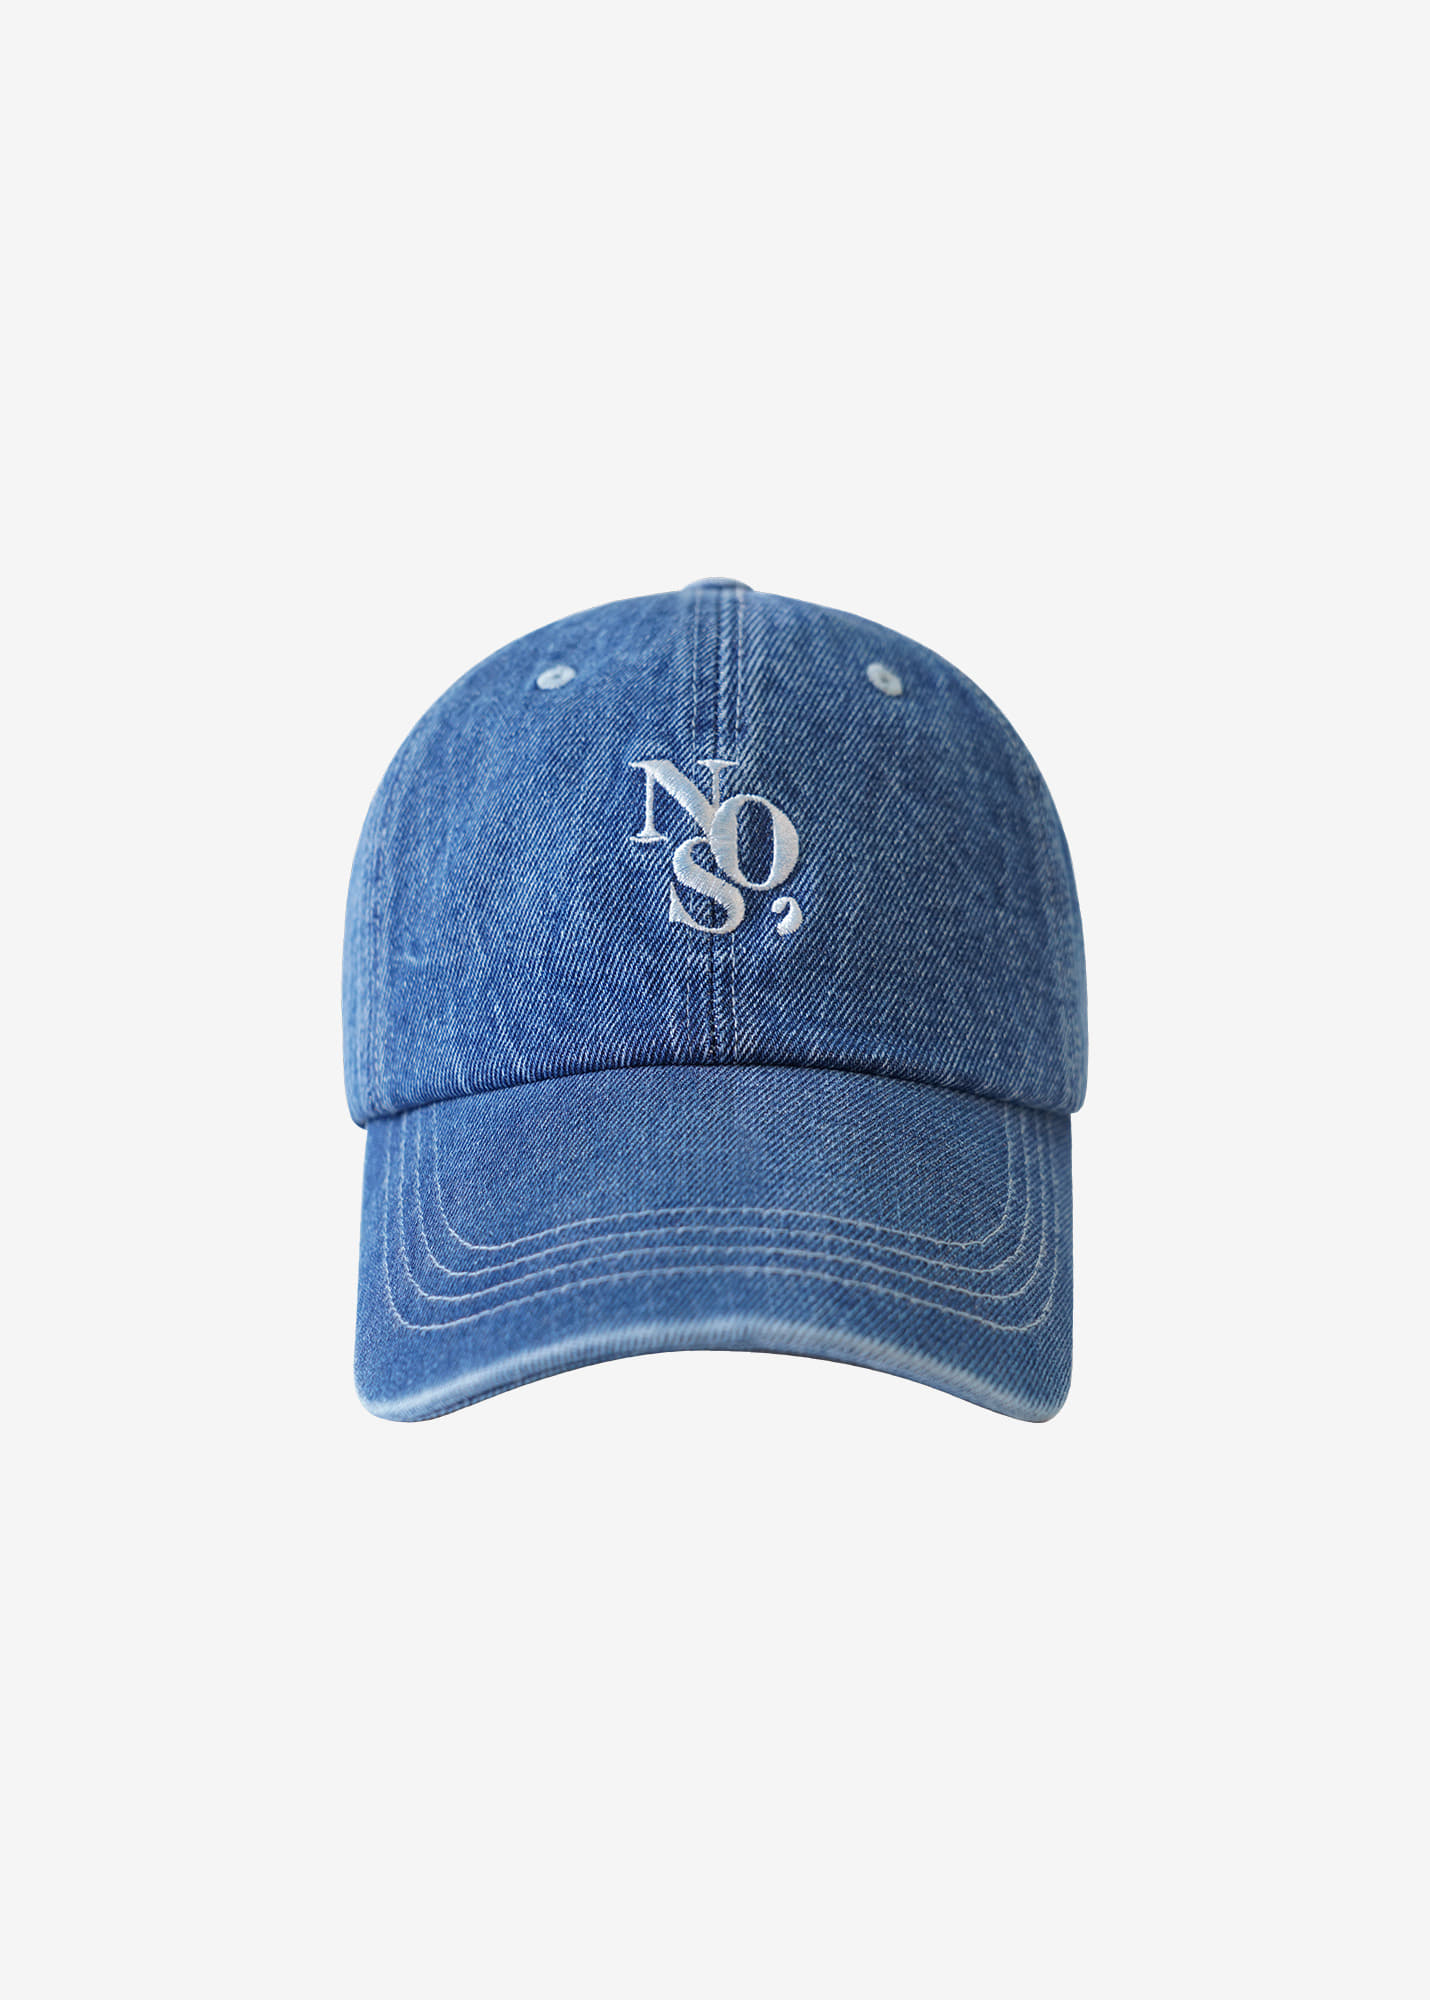 Ball cap - denim dark blue (shipped sequentially after 7/22)